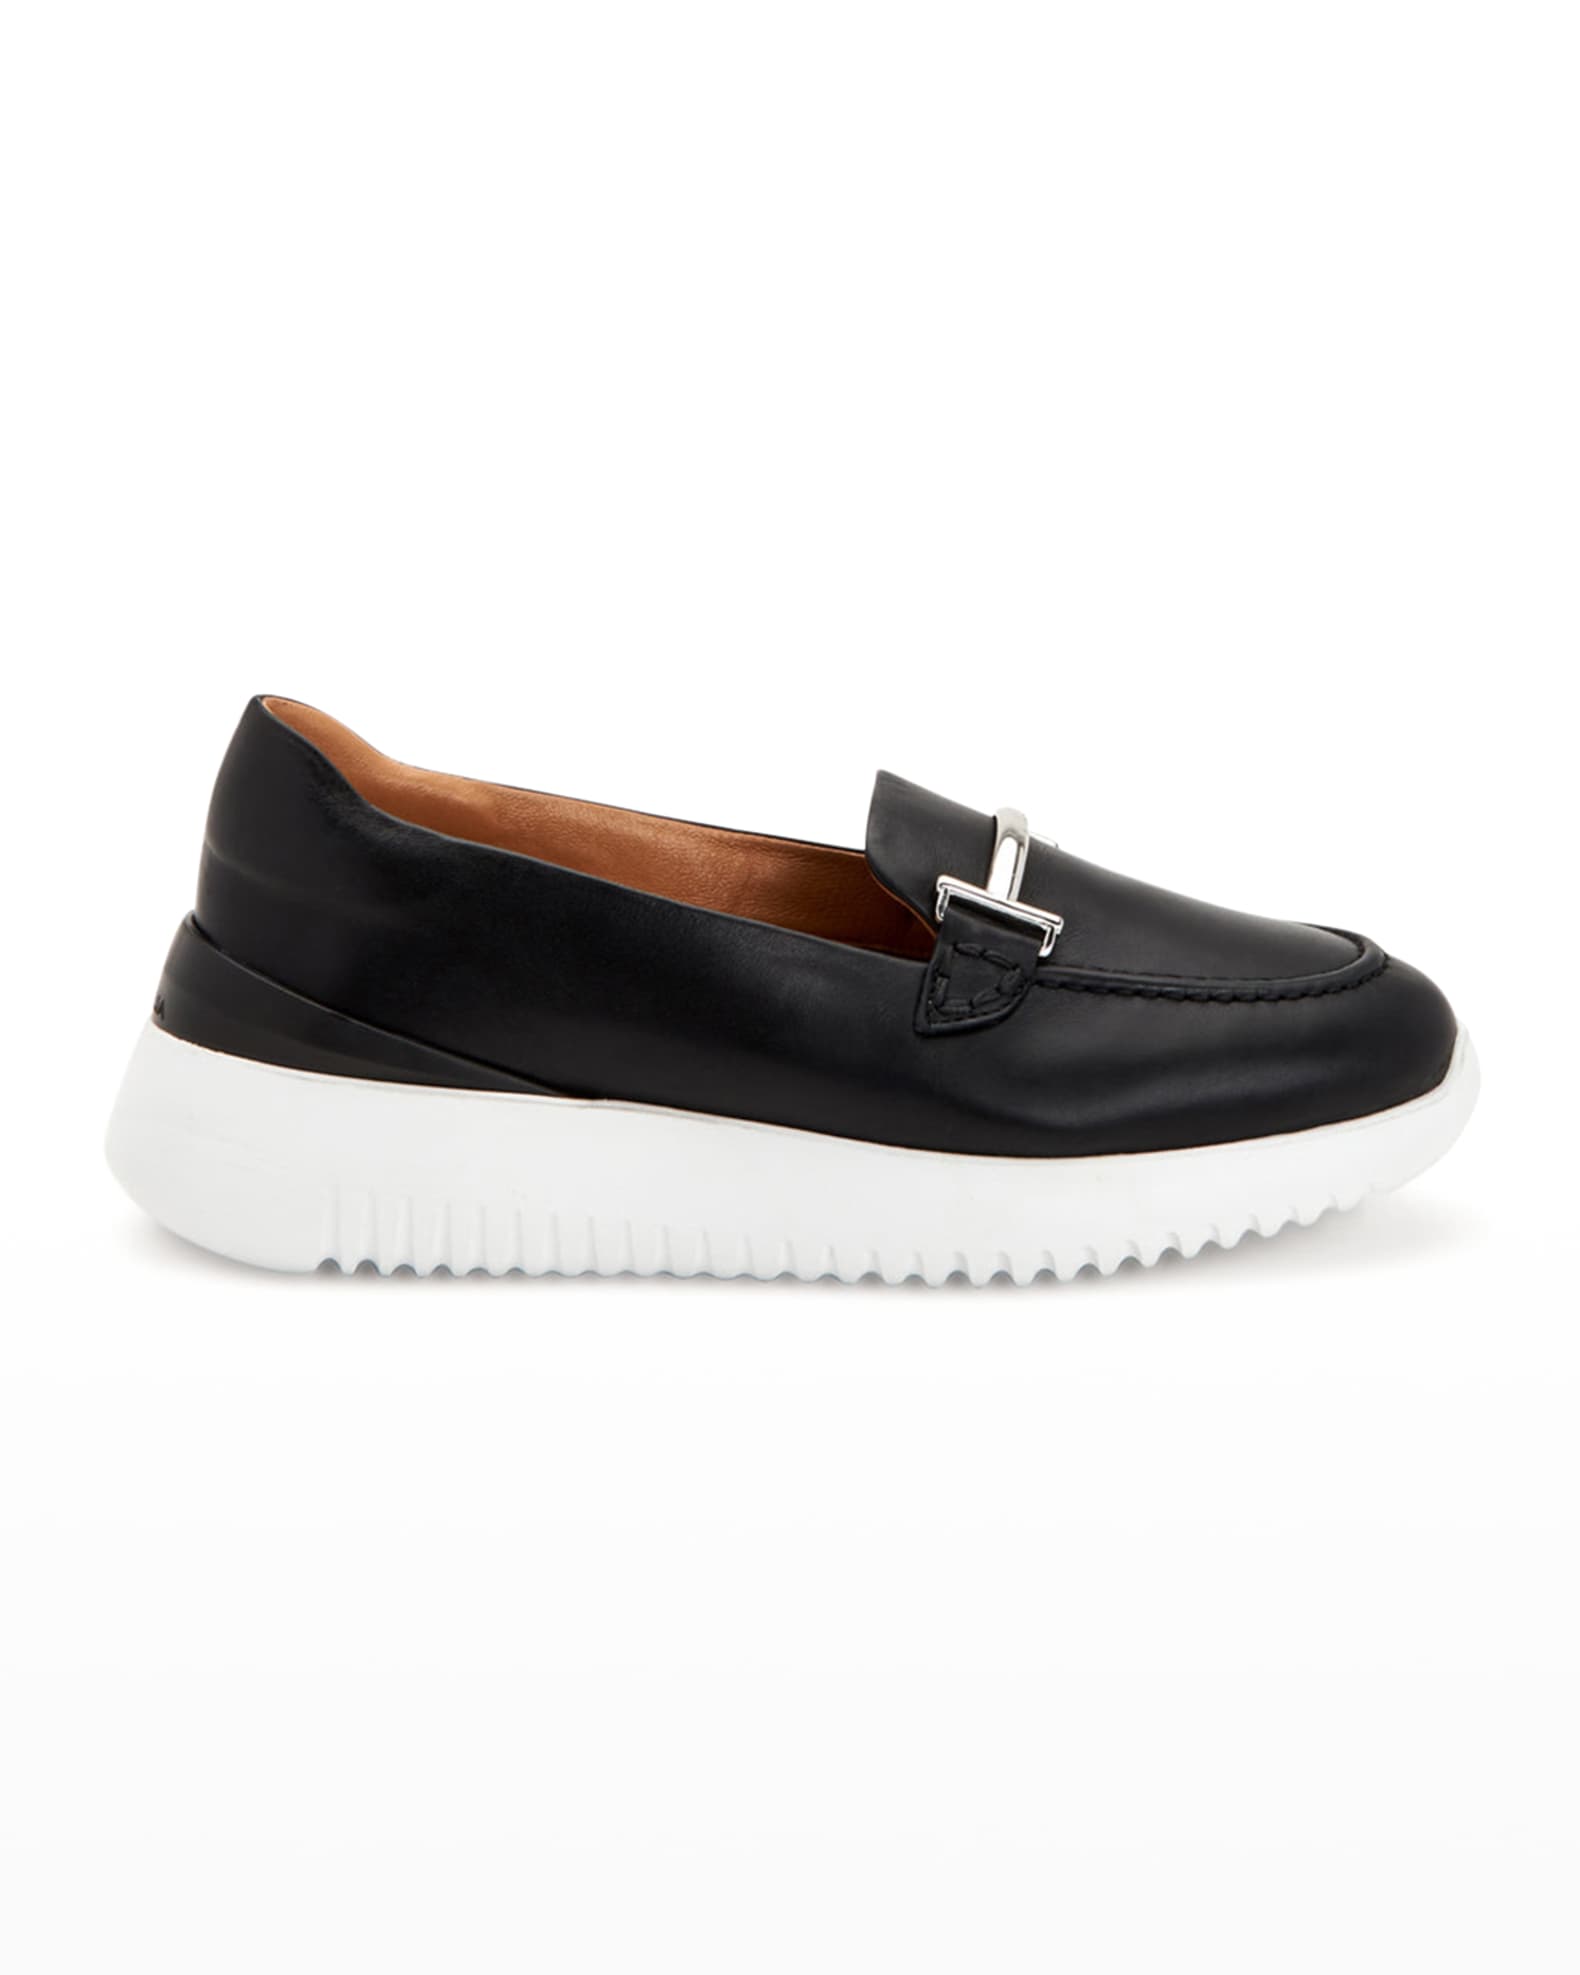 Aquatalia Callee Suede Sneaker Loafers | Neiman Marcus